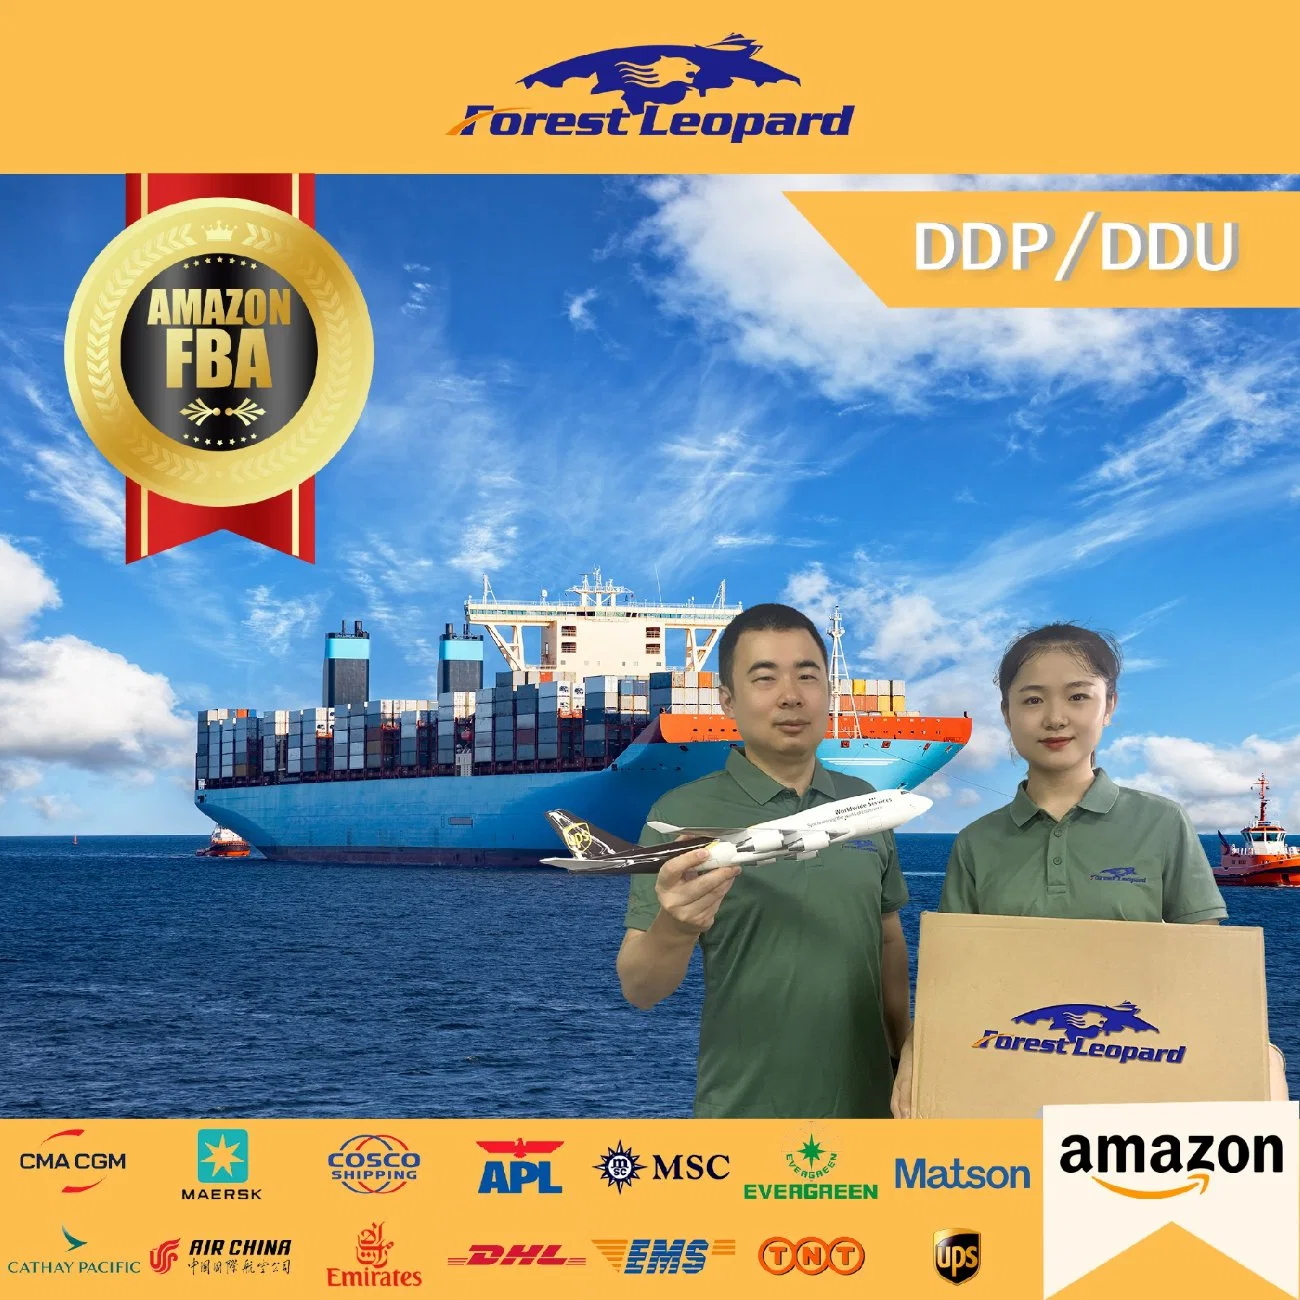 Sea Freight Forwarder From China to USA UK Australia United Kingdom Europe America DDP Fba Amazon Shipping Forestleopard